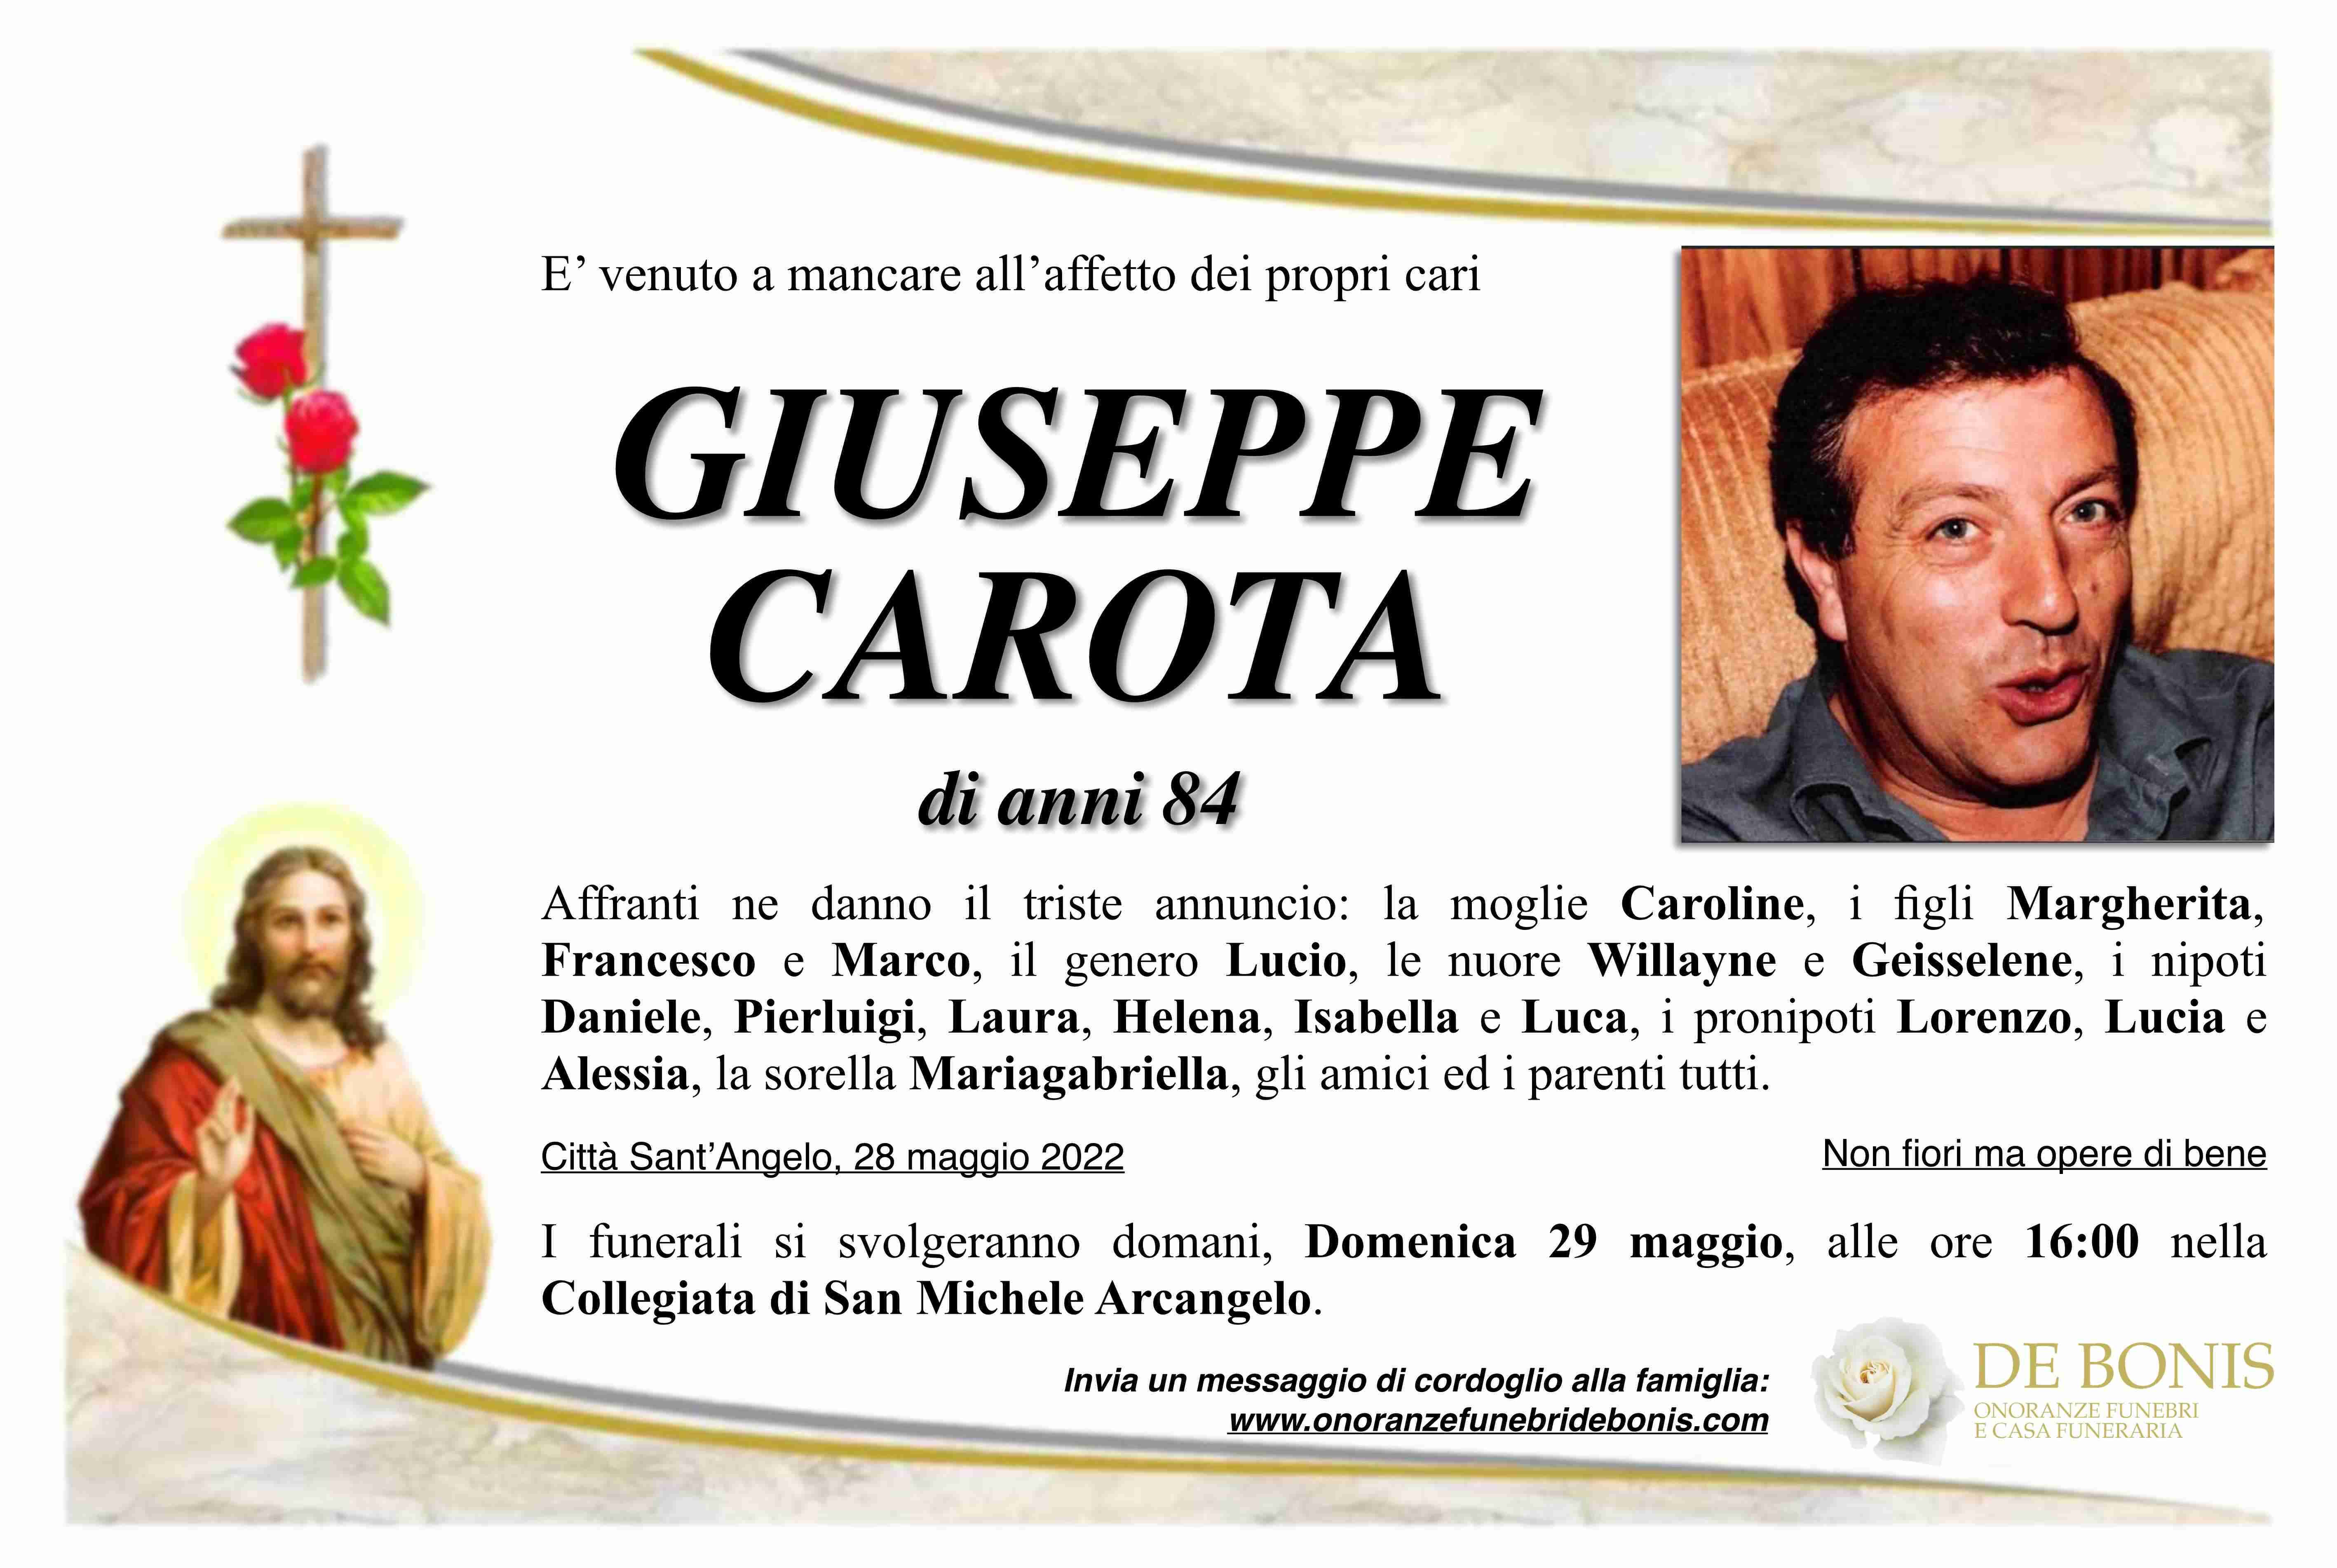 Giuseppe Carota